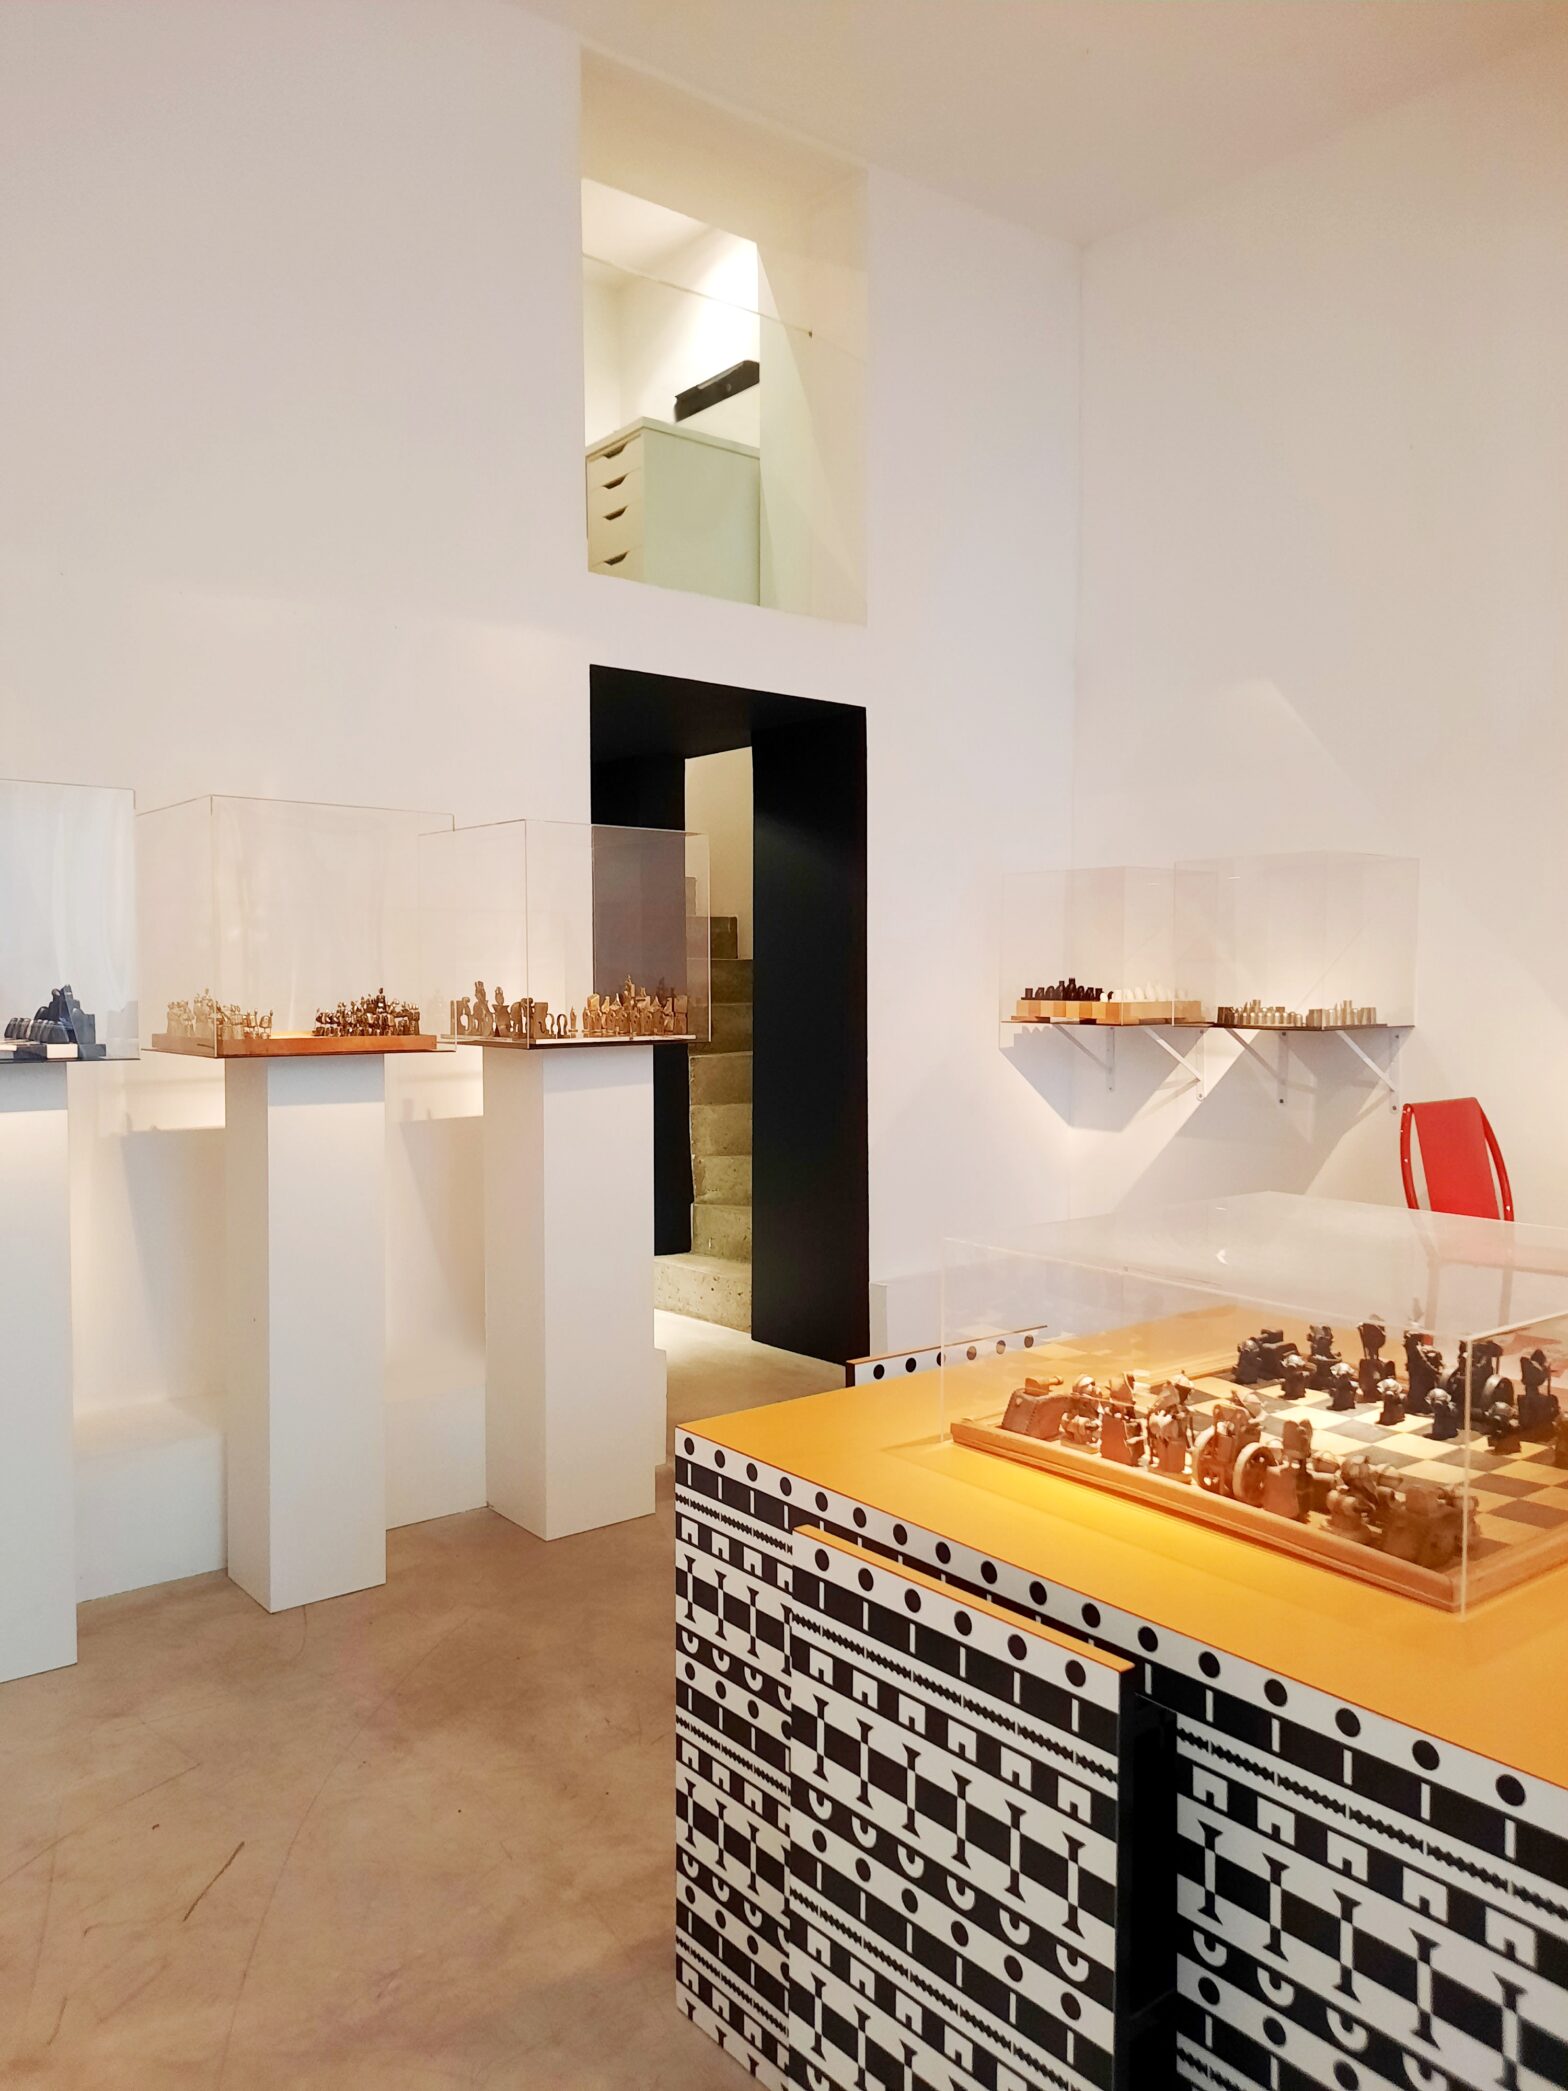 Exposition "Chess Design" / 13 octobre - 12 novembre 2022 / Galerie Romain Morandi, Paris